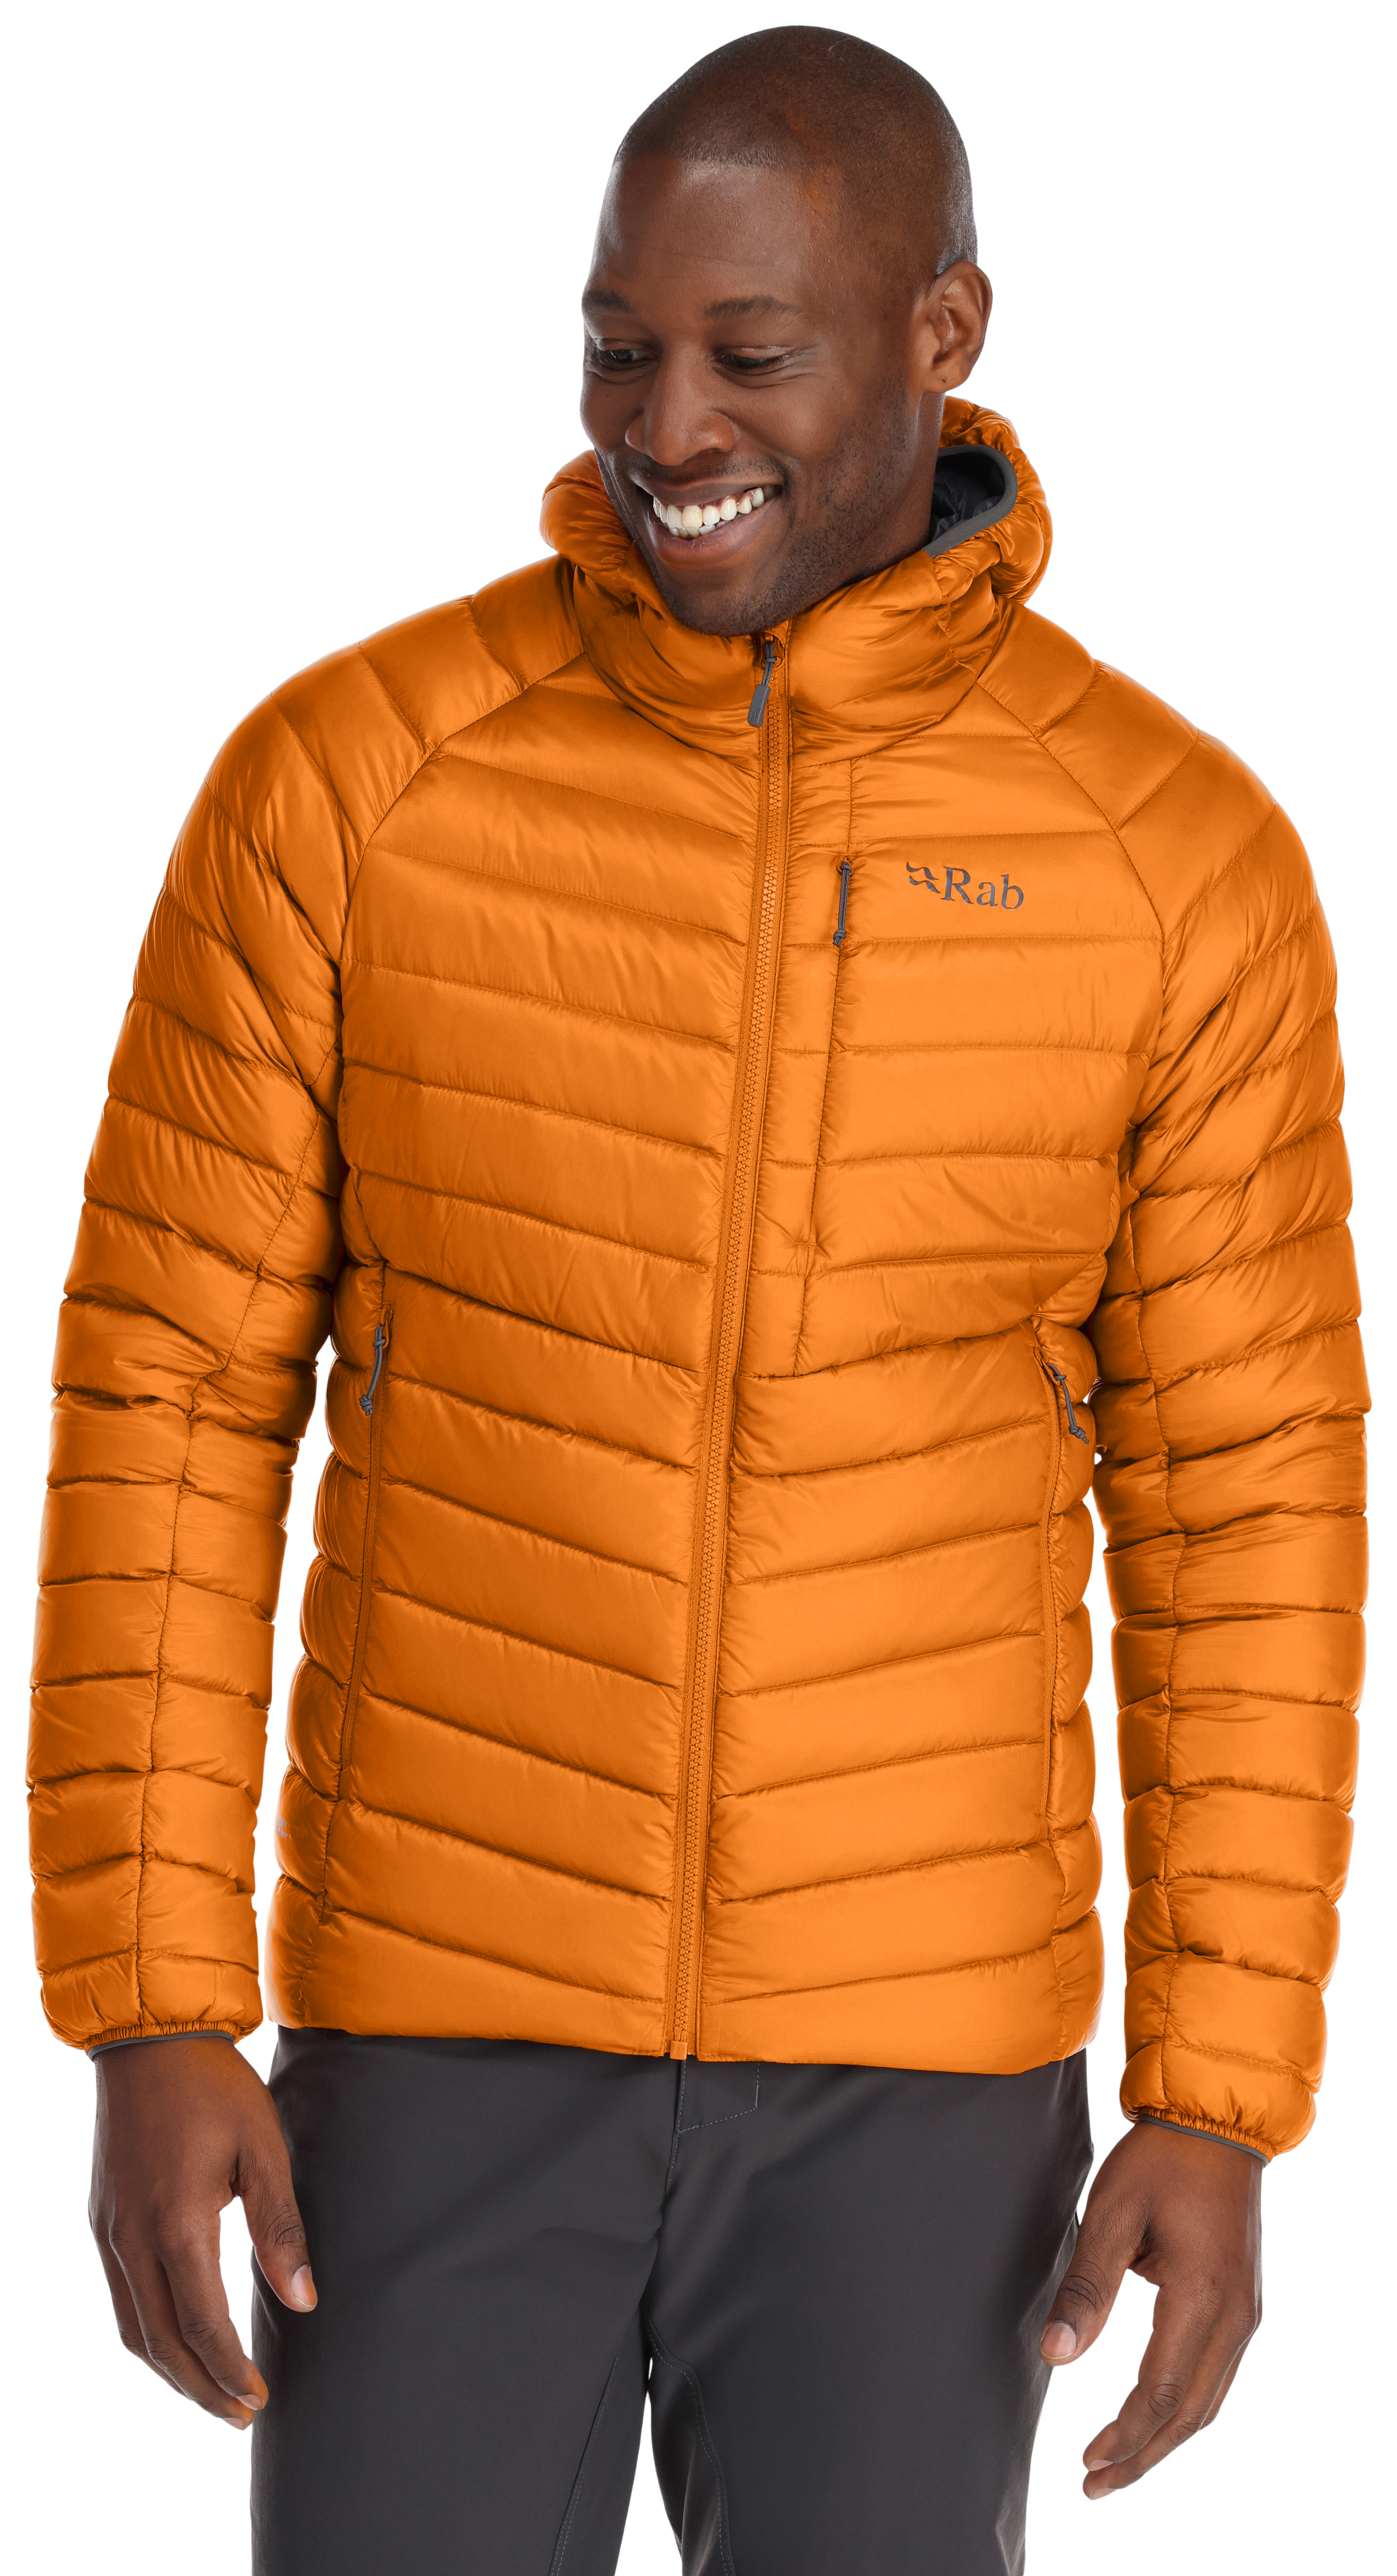 Rab Men’s Alpine Pro Jacket Marmalade